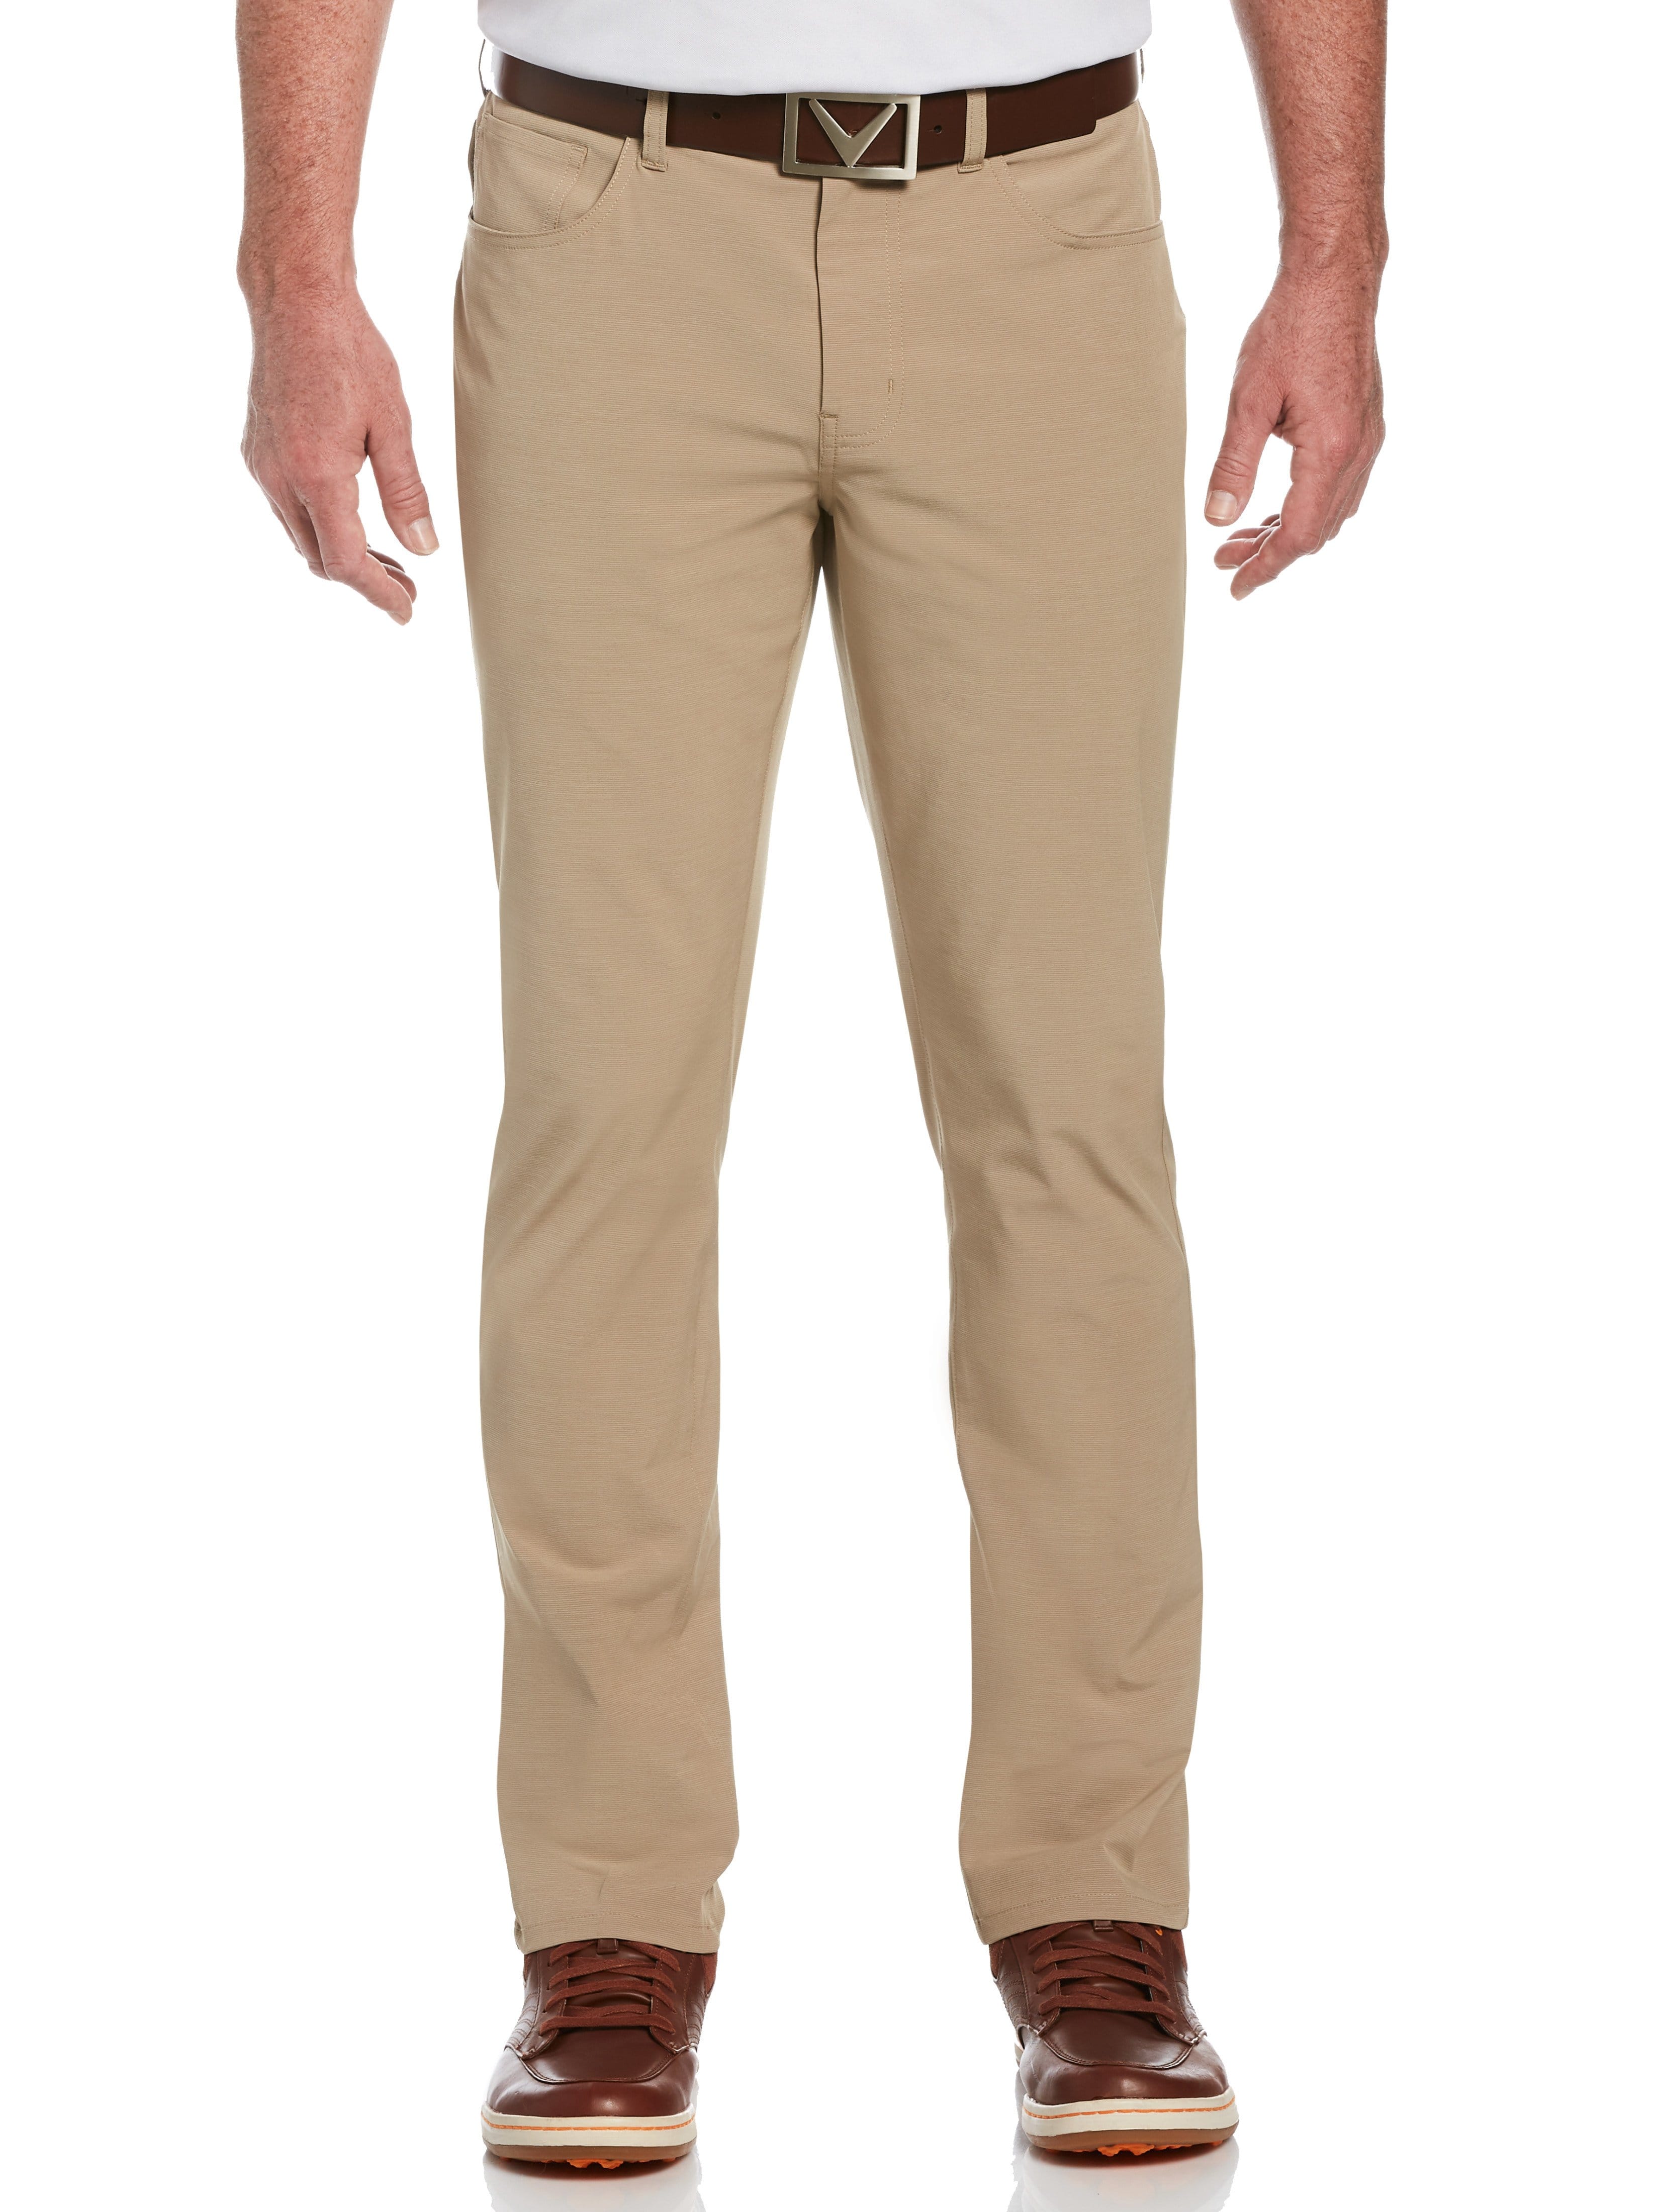 Callaway Apparel Mens Big & Tall EverPlay™ 5-Pocket Pants, Size 52 x 30, Khaki Heather Beige, Polyester/Cotton/Elastane | Golf Apparel Shop